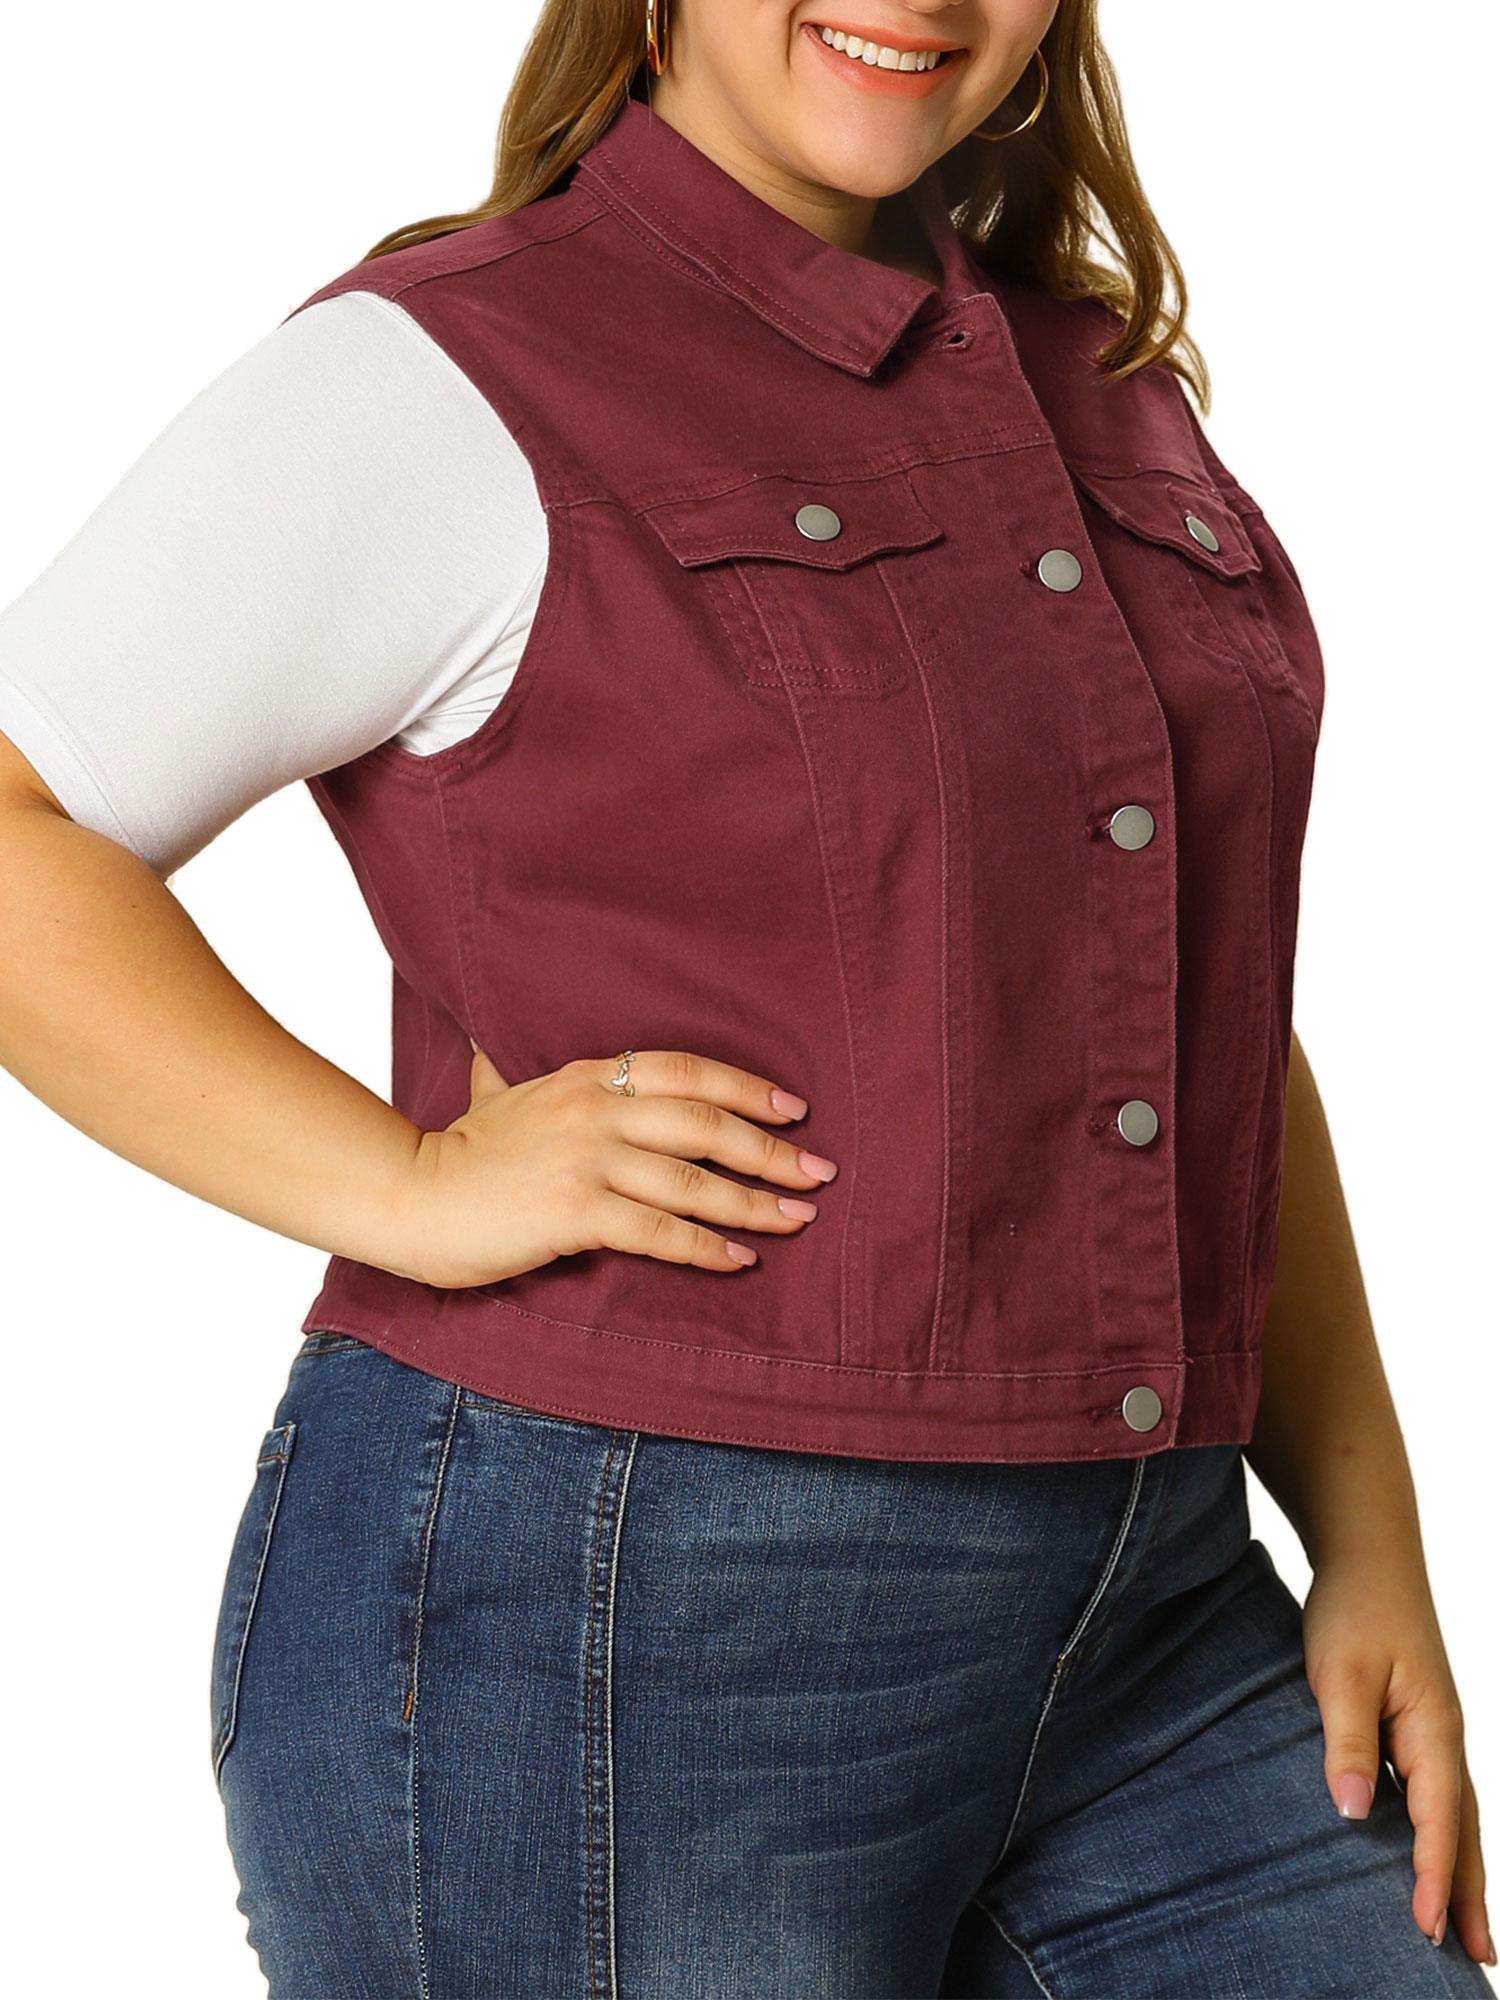 Agnes Orinda Women's Plus Size Casual Button Sleeveless Denim Vest Jacket - image 5 of 7